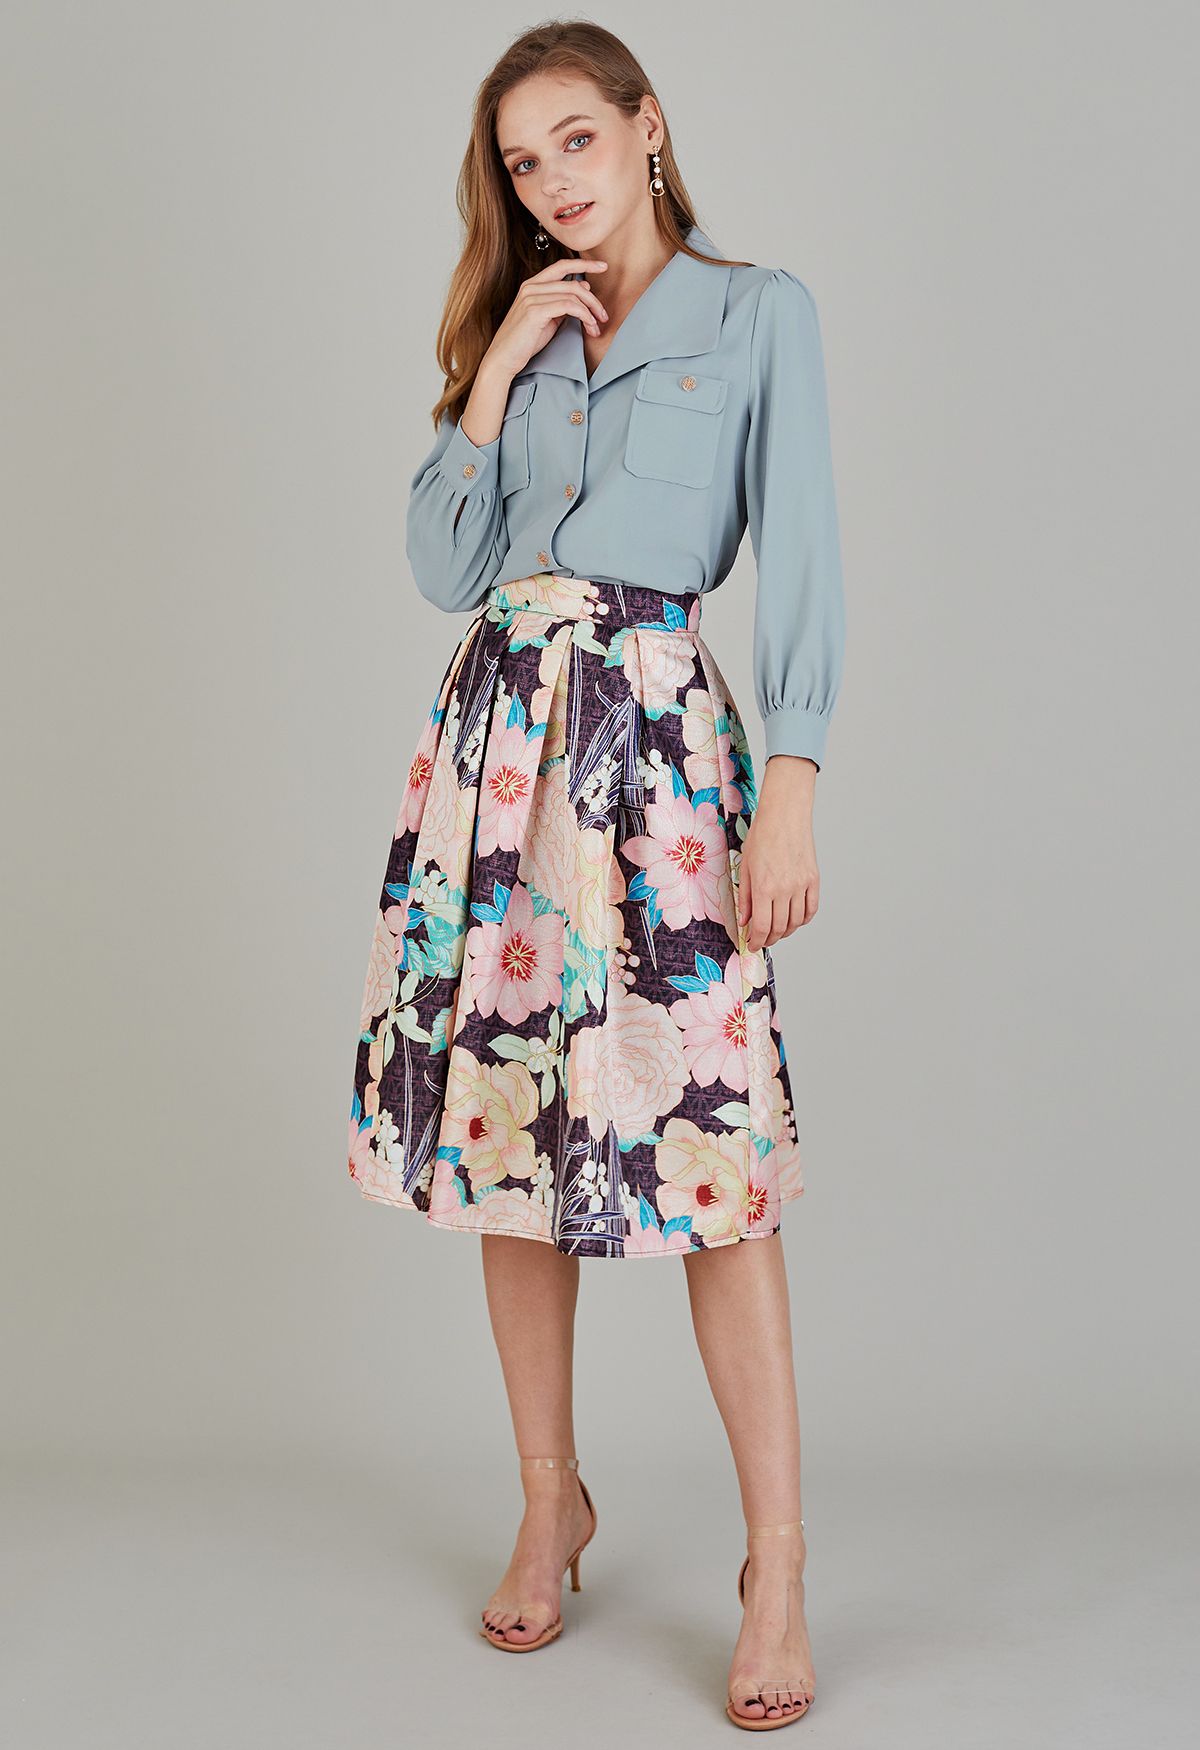 Lustrous Metallic Floral Printed Midi Skirt